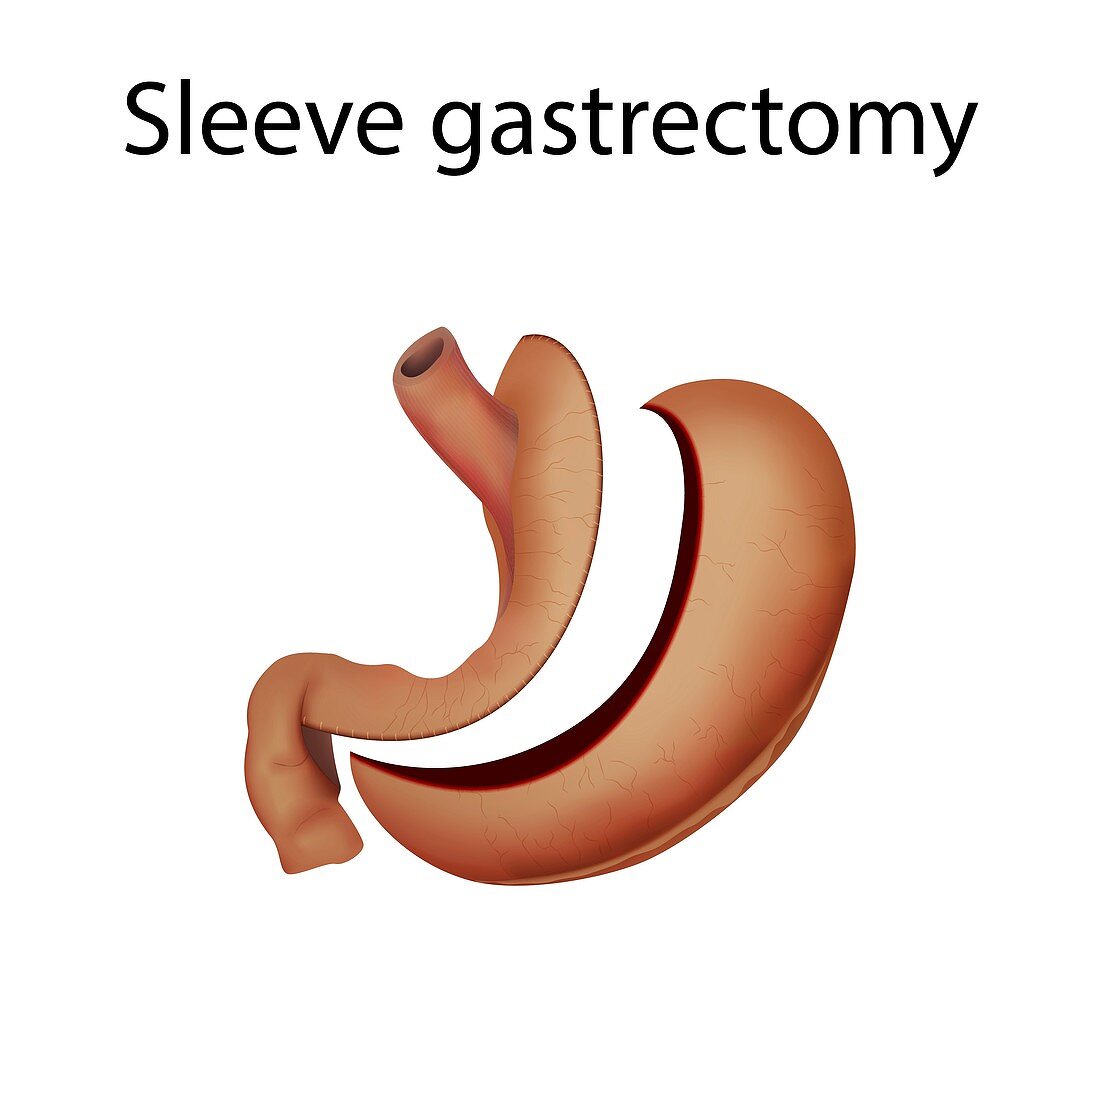 Sleeve gastrectomy,illustration